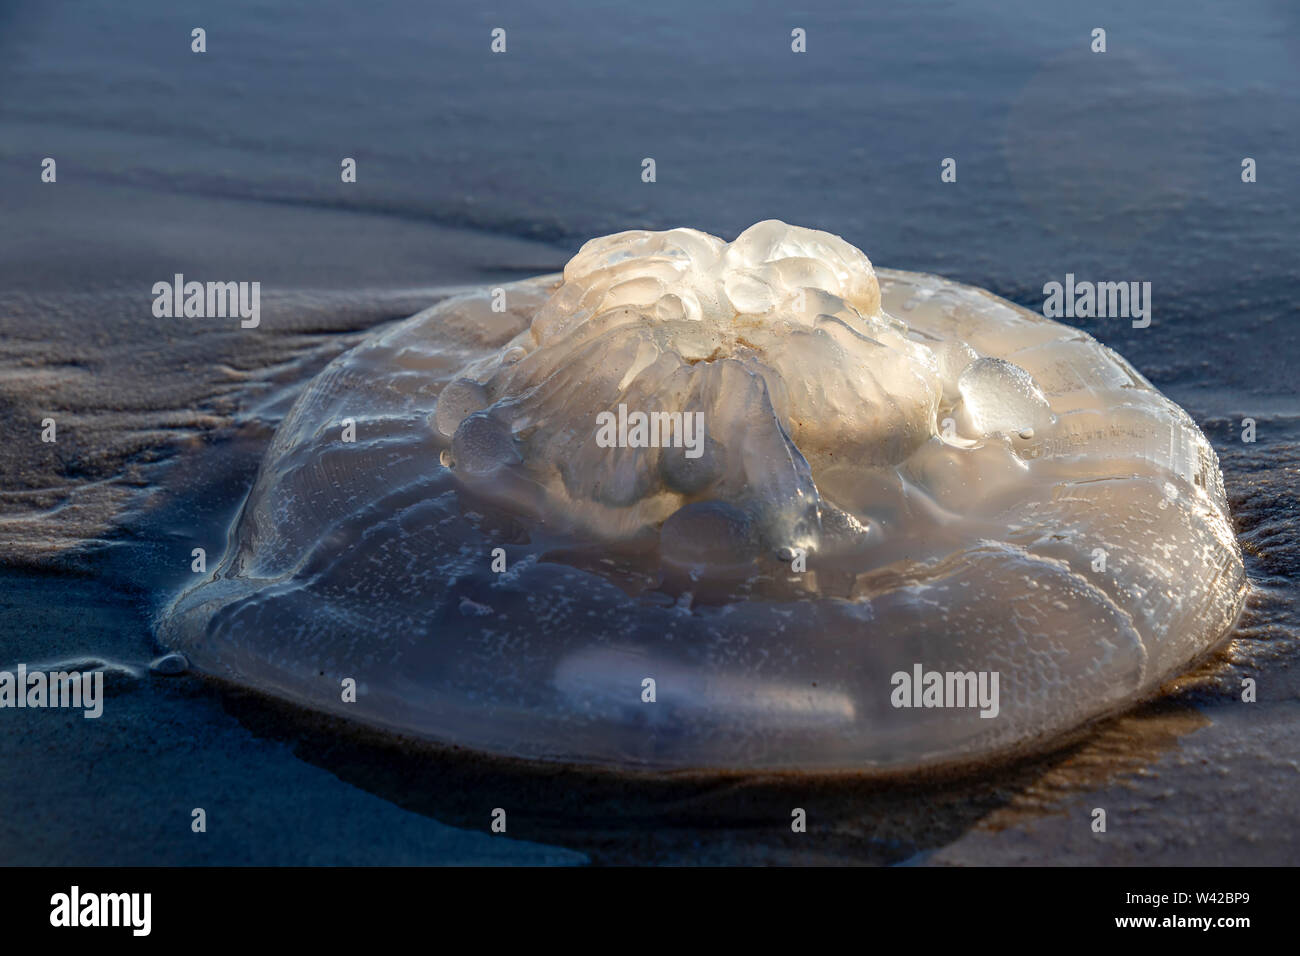 Rhopilema nomadica jellyfish on the coastal sand. Mediterranean Sea. Stock Photo